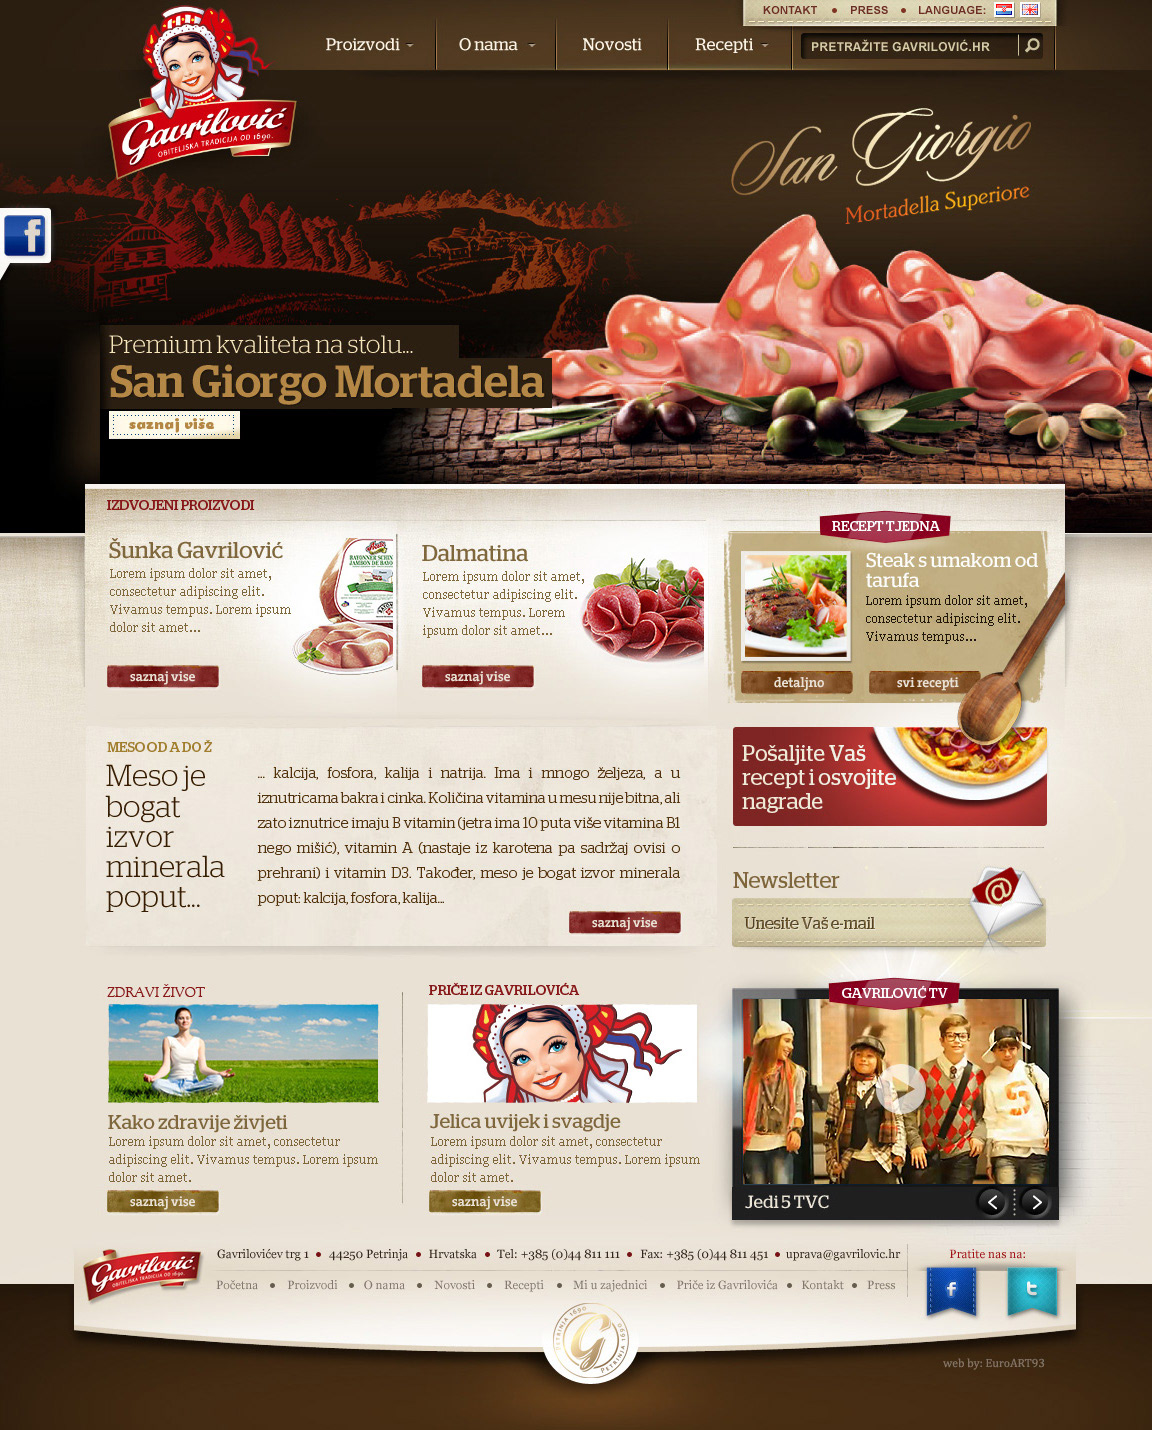 Gavrilovic  FOOD  Meat  meso  gavrilovic  euroart93  euroart  web  CMS  sousage  pasta  recepies  wine